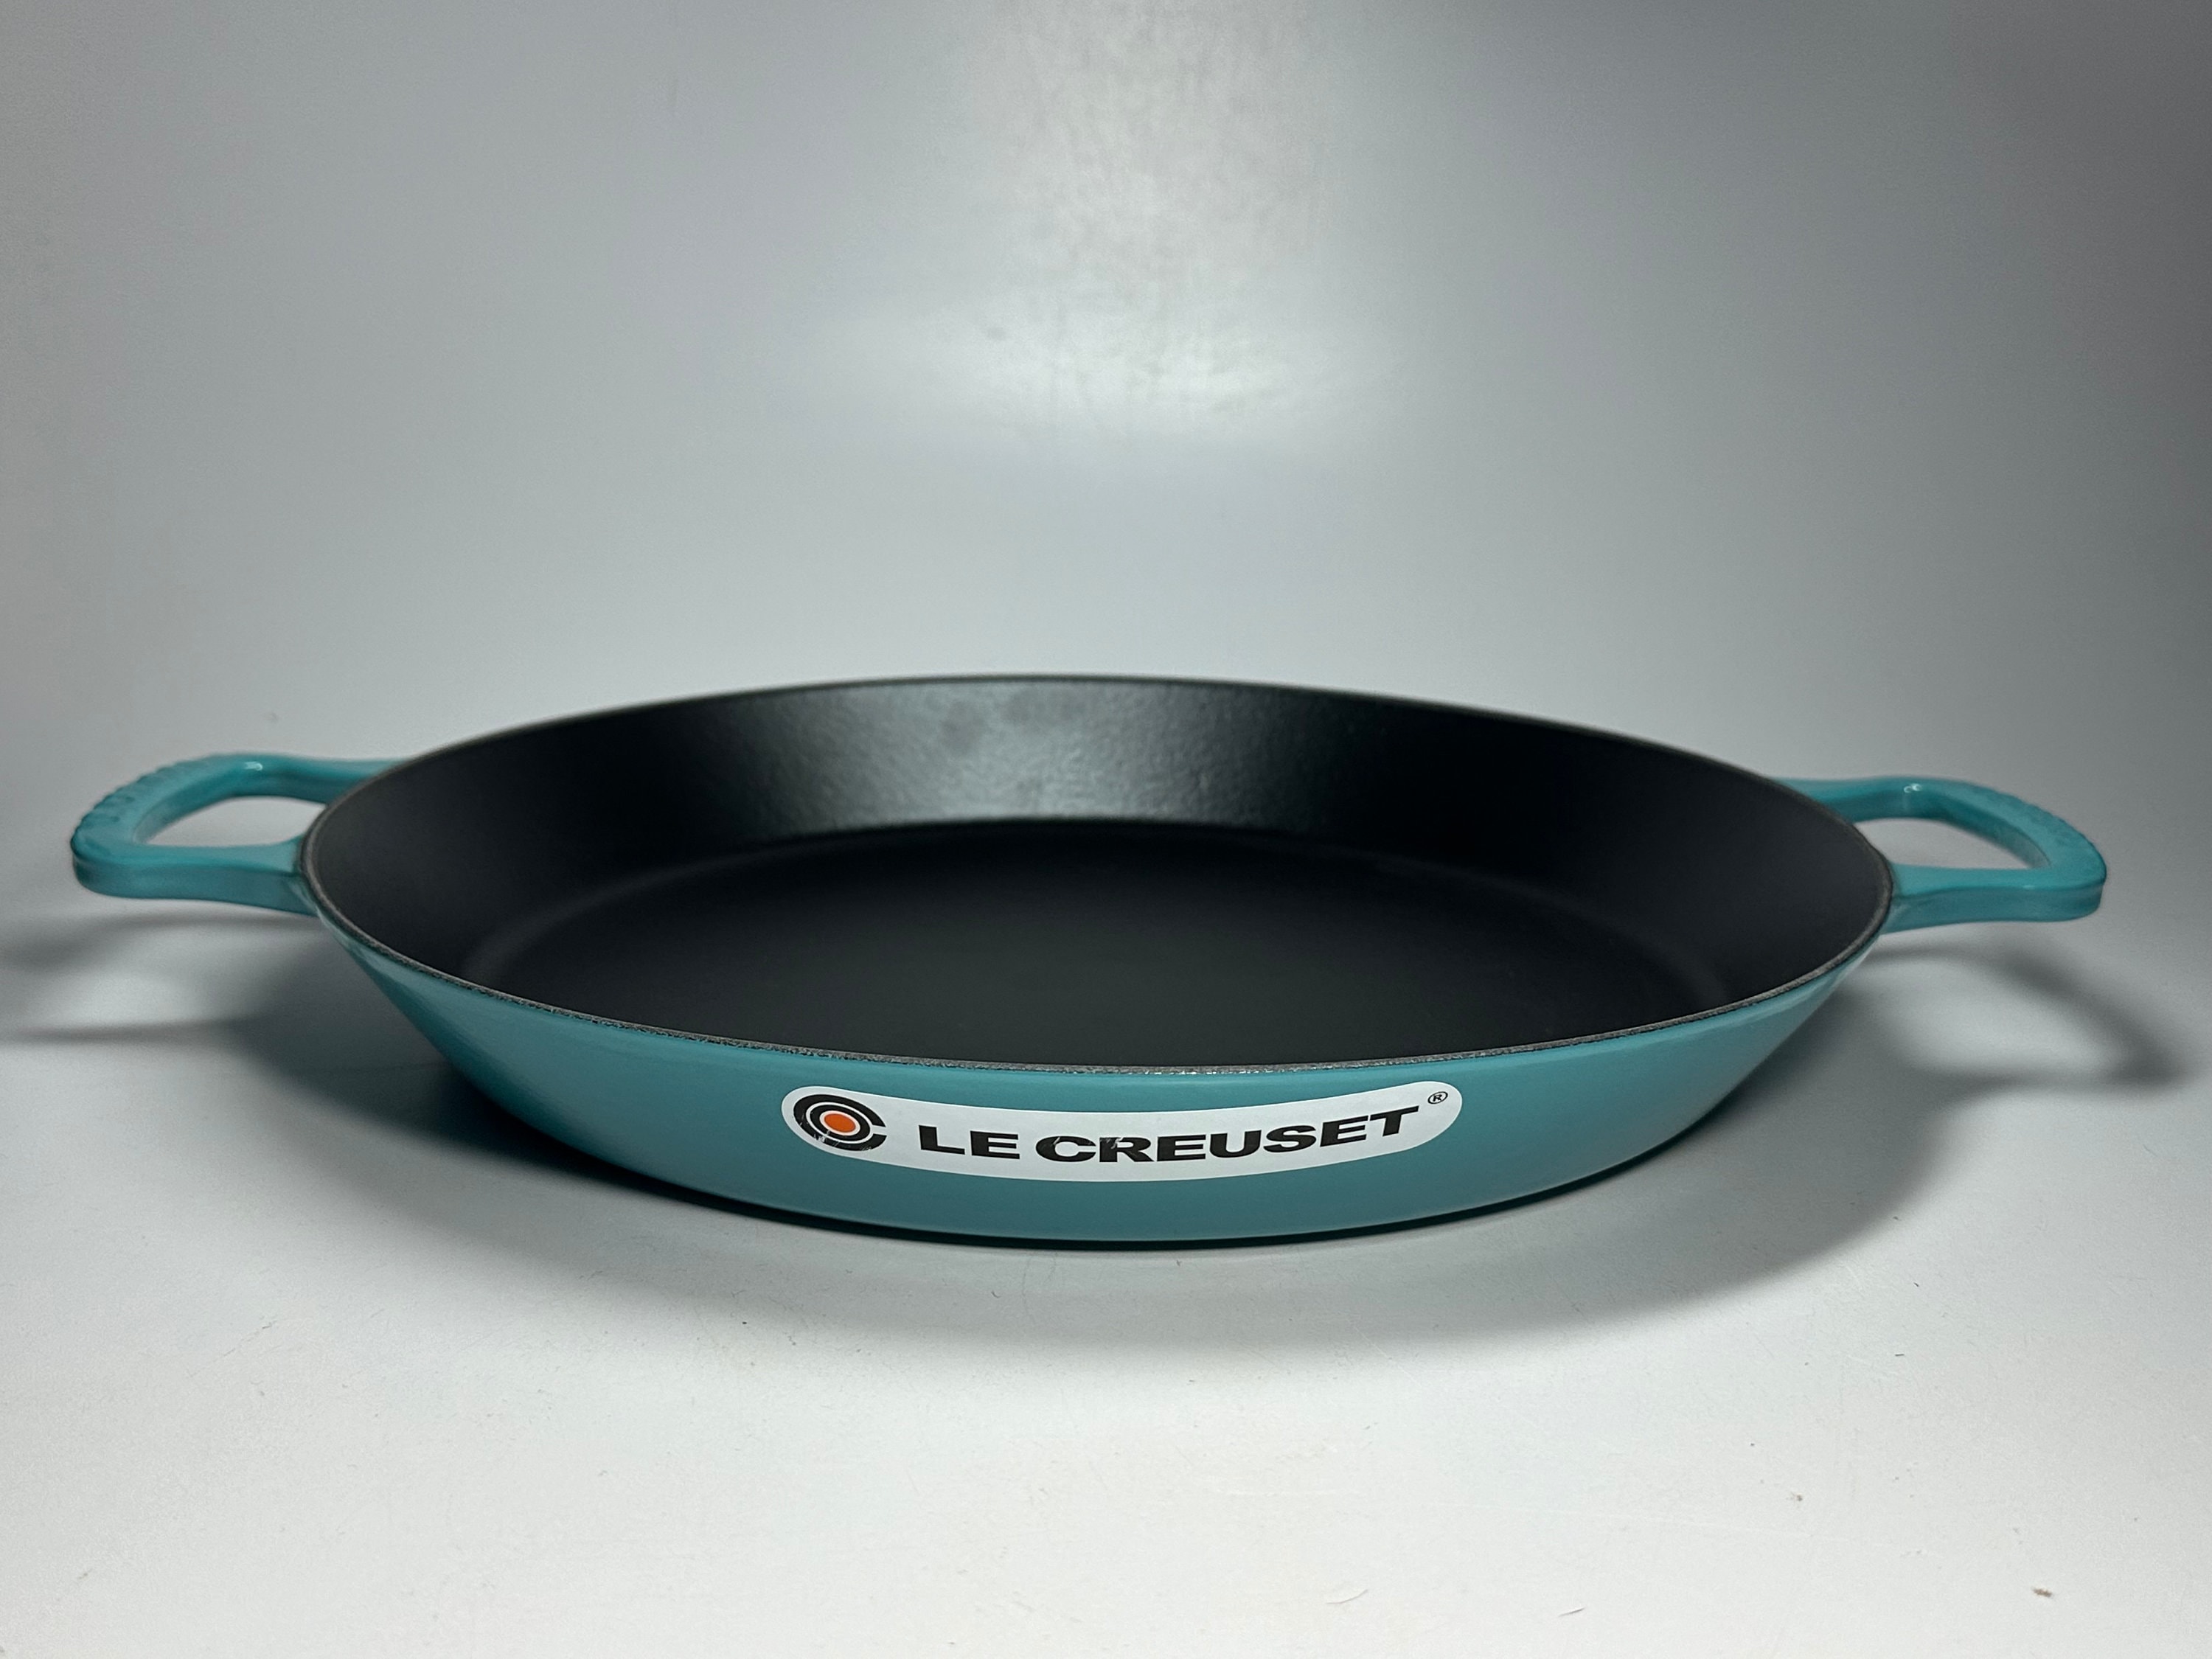  Segretto Cookware 3.6 QT Braiser Enameled Cast Iron Casserole  Pan With Cover, Nero (Black) Cast Iron Braiser Pan With Lid, Lasagna Pan  Enamel Cast Iron Cookware